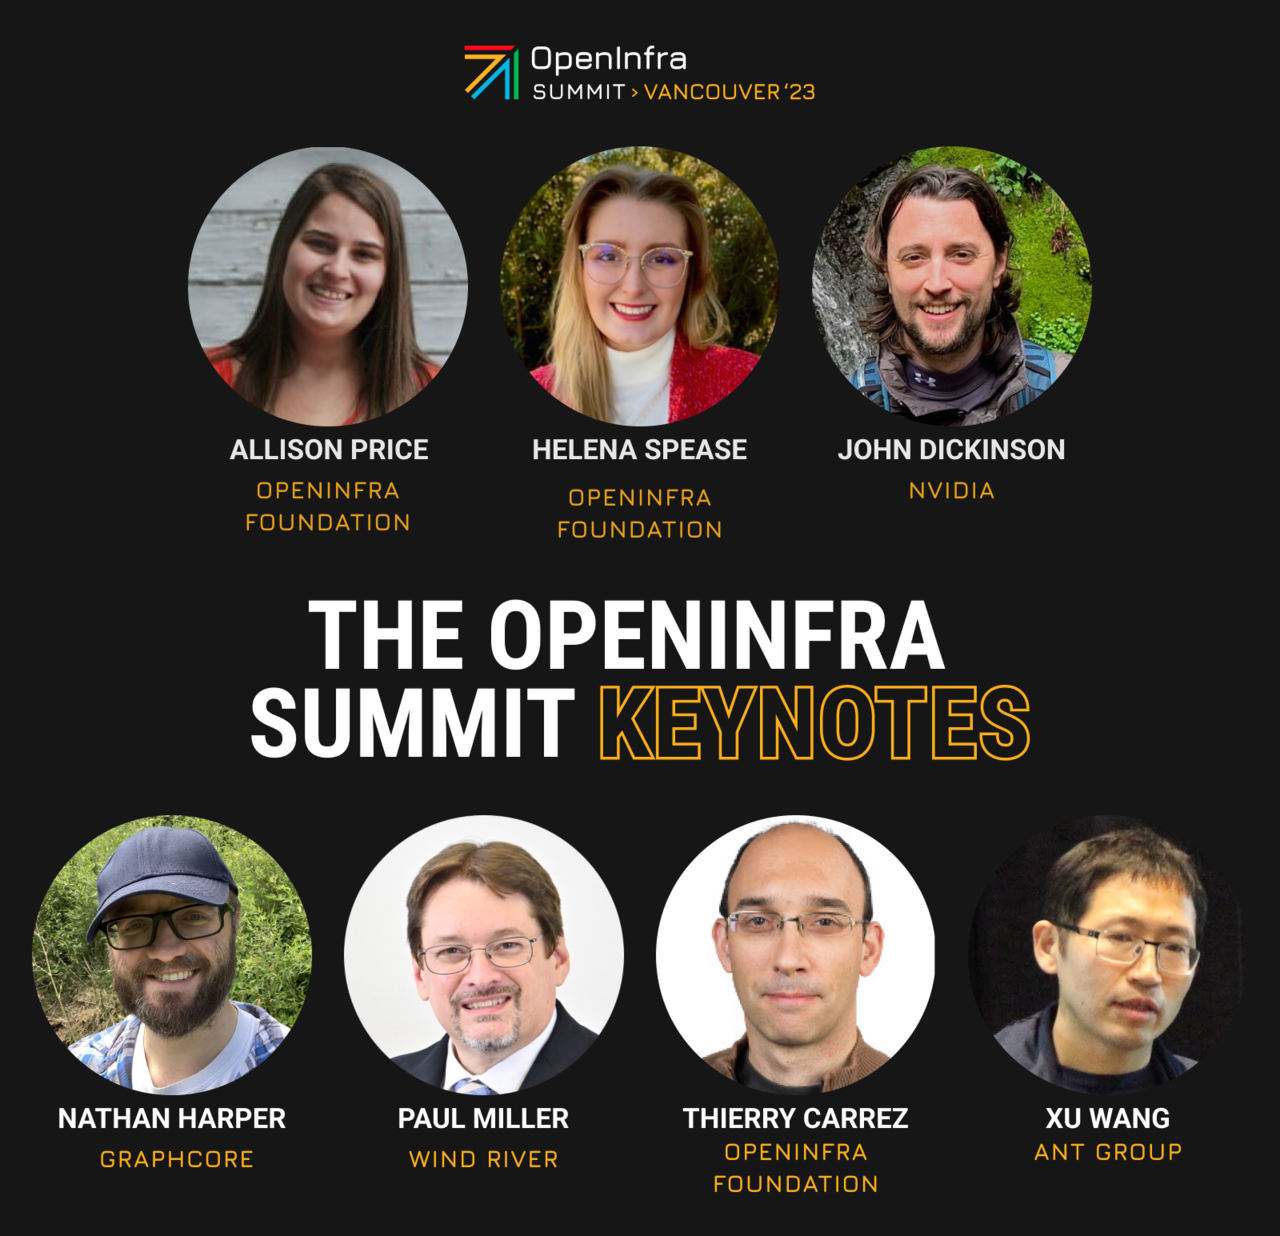 Inside Open Infrastructure: The OpenInfra Summit Keynotes